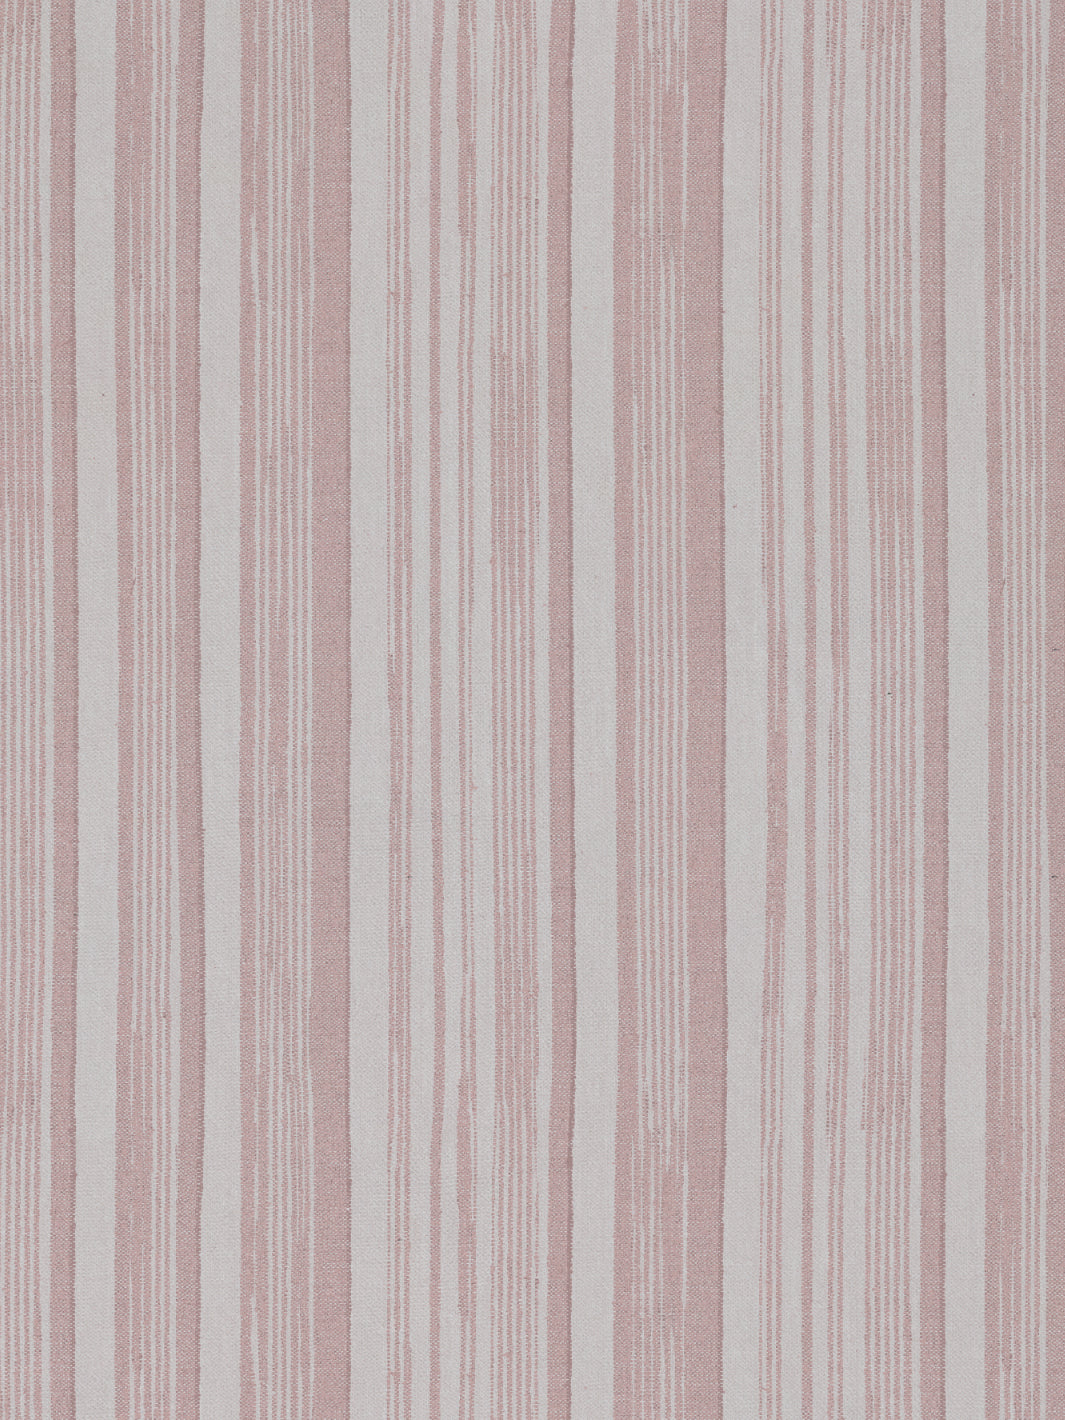 'Stuart Stripe' Linen Fabric by Nathan Turner - Pink